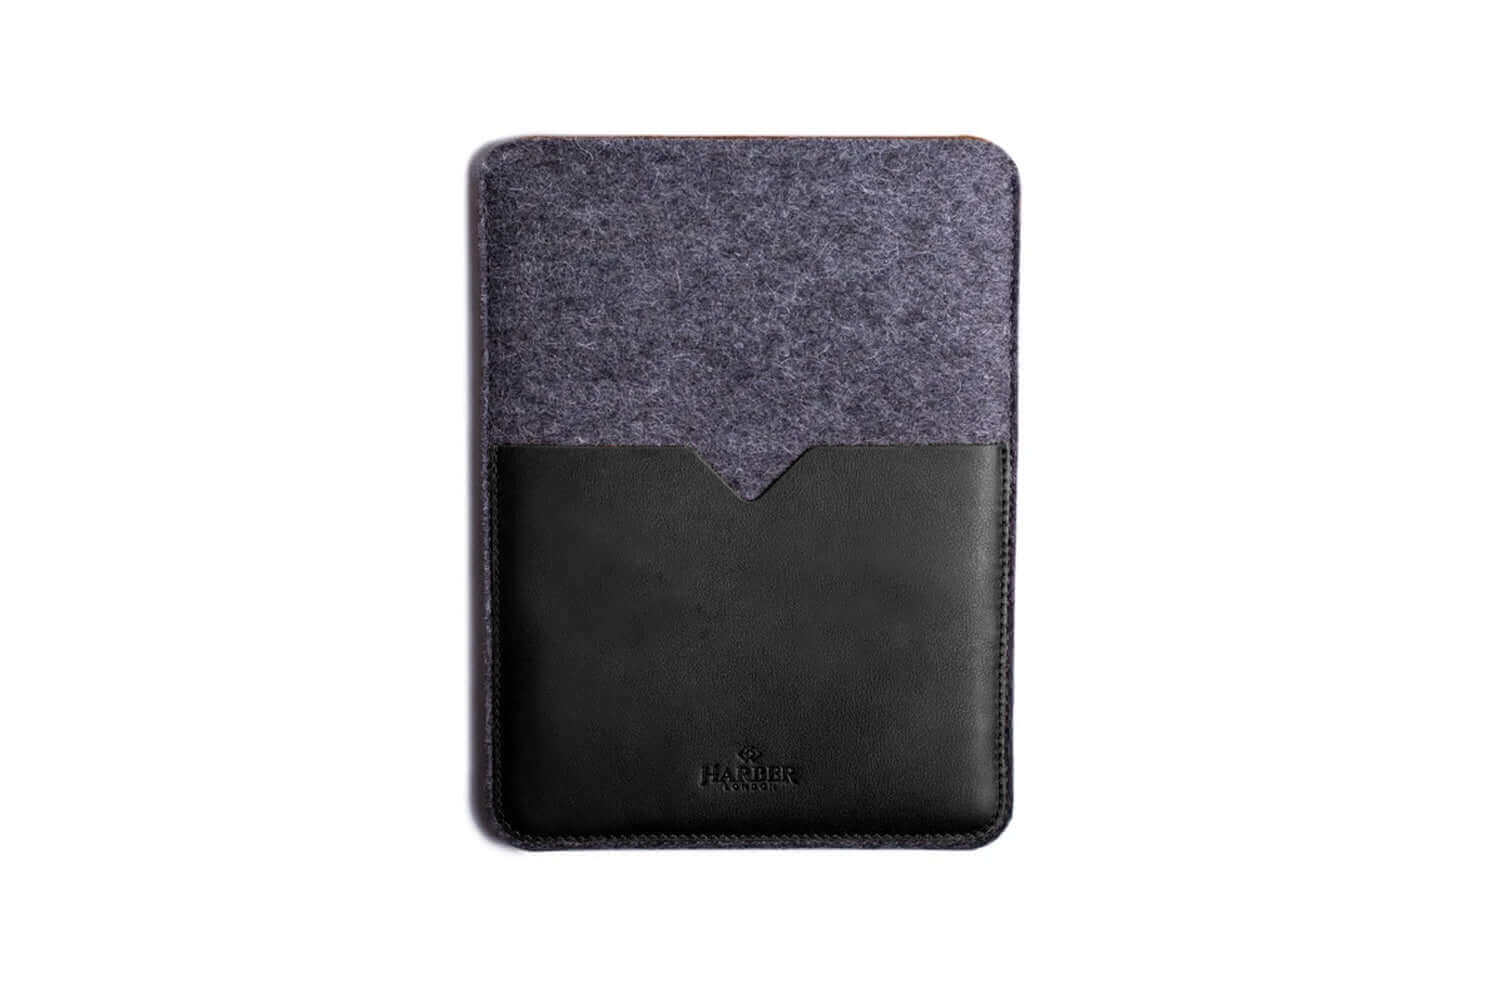 Classic – Leather iPad & Kindle Sleeve Case